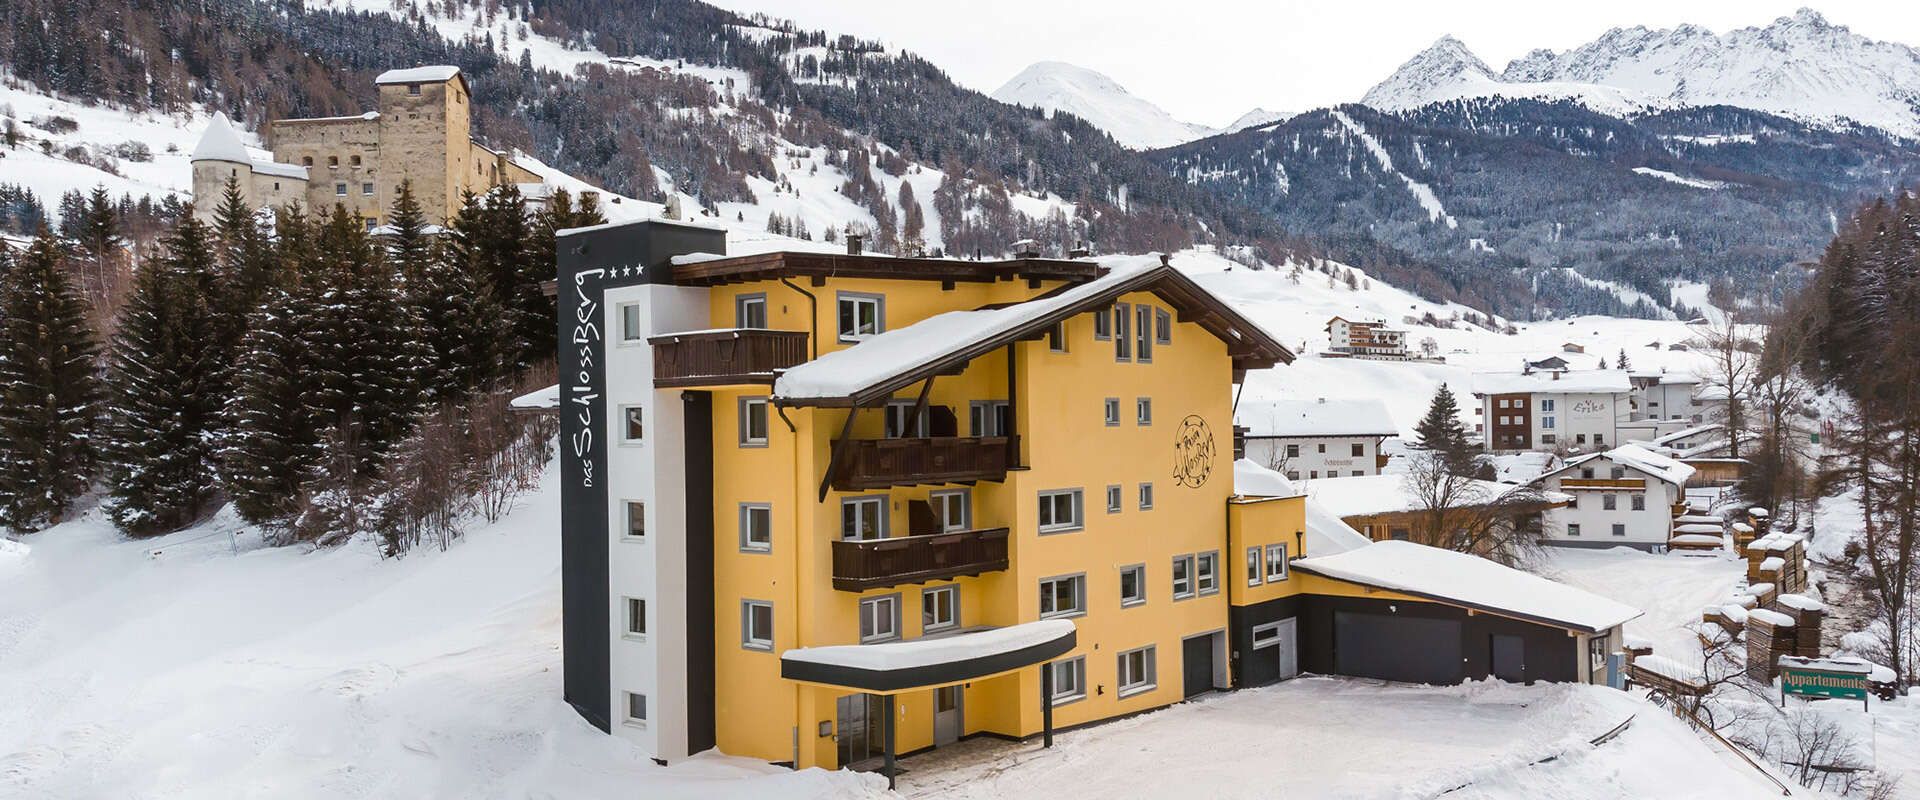 Hotel Das Schlossberg Nauders in the Tyrolean Oberland in winter